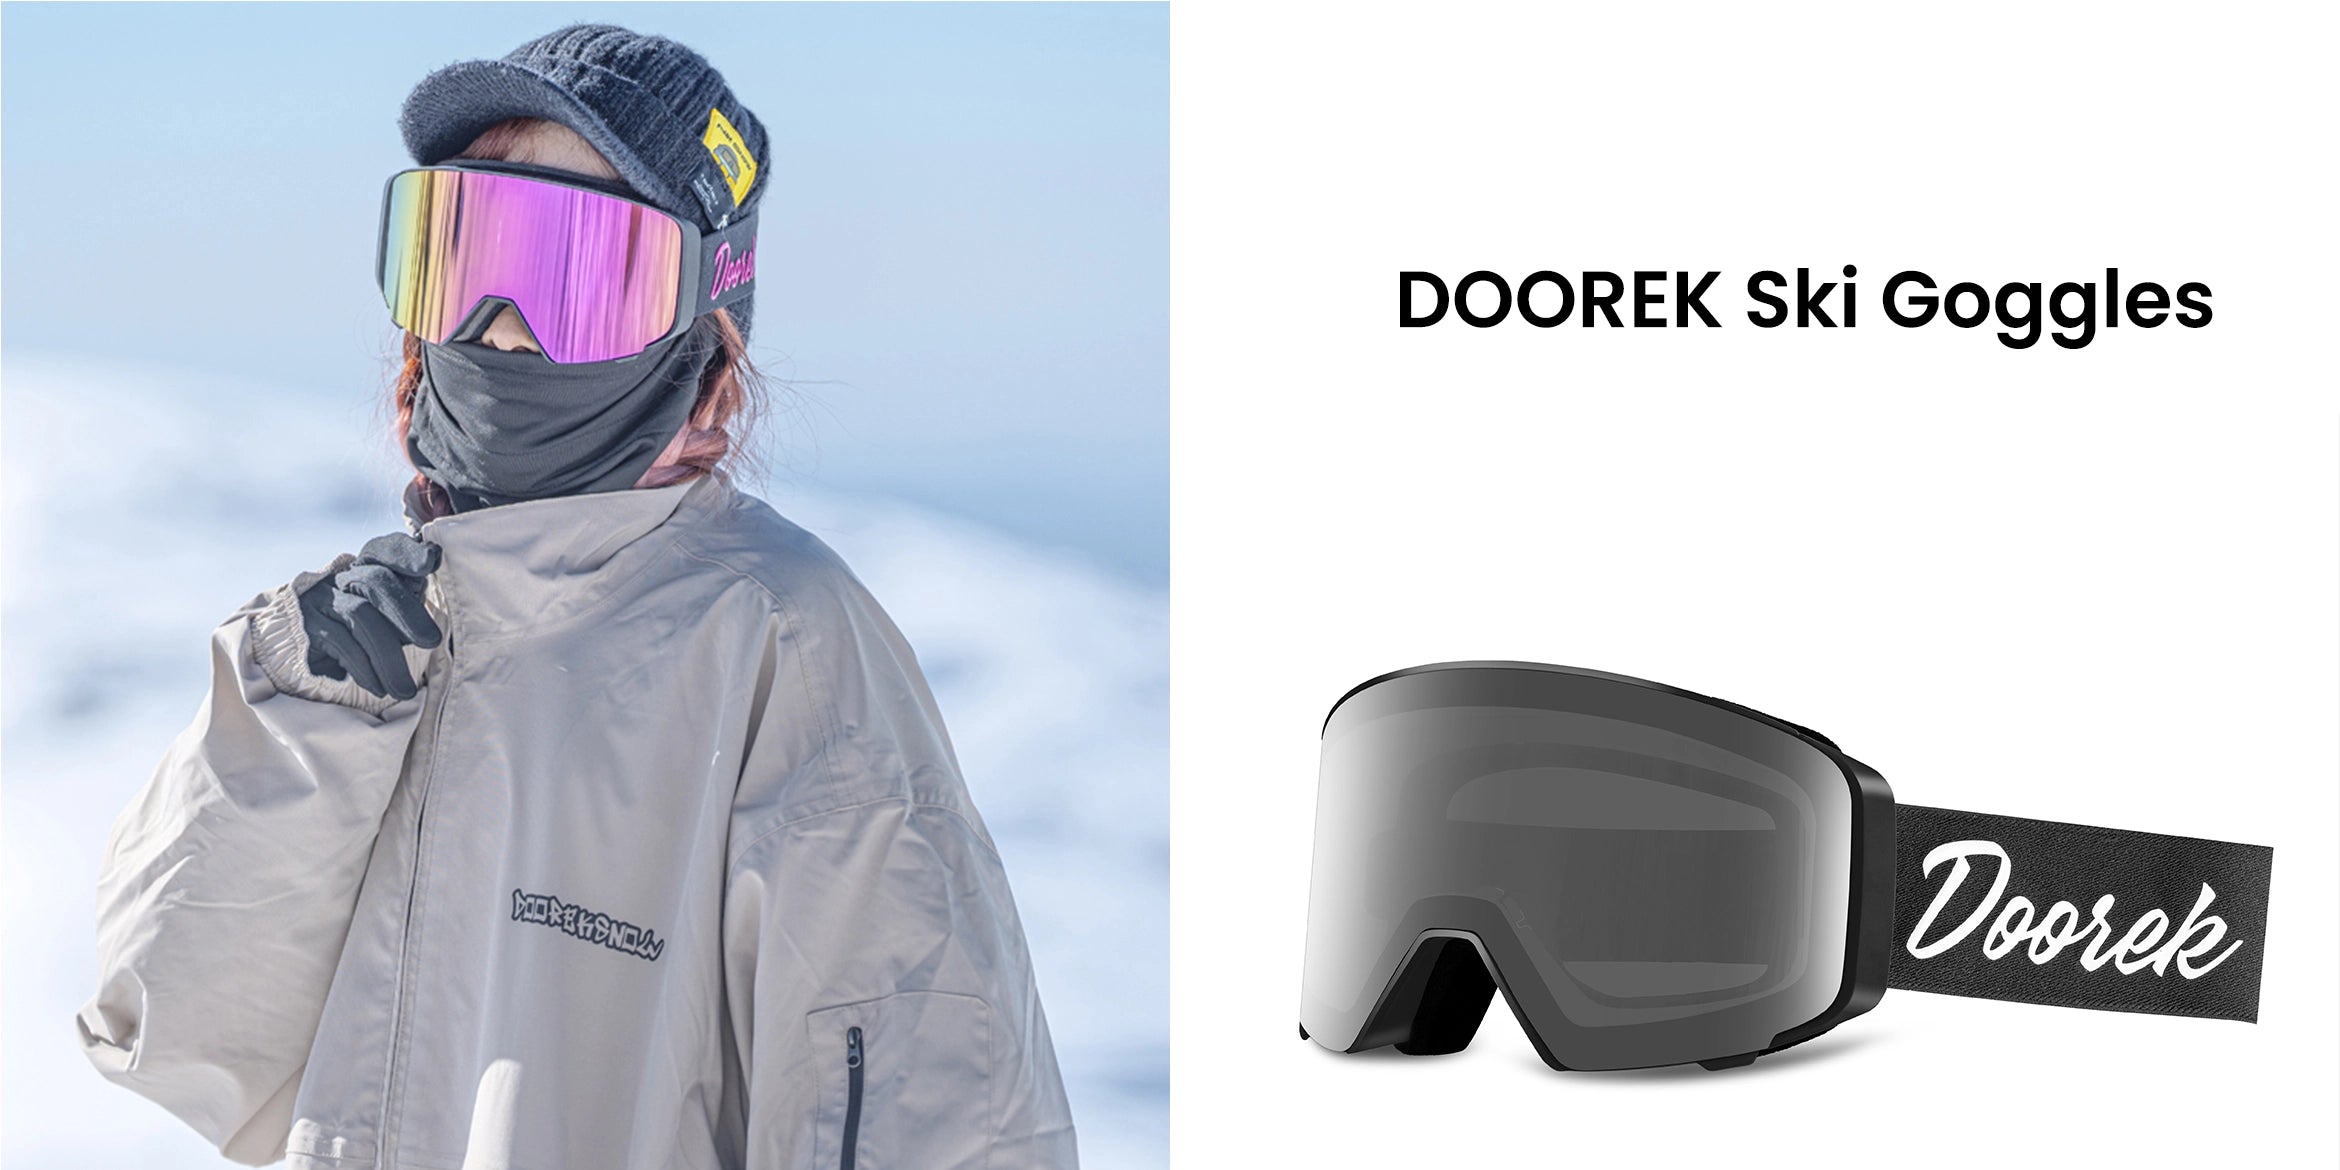 1. Doorek Ski Goggles